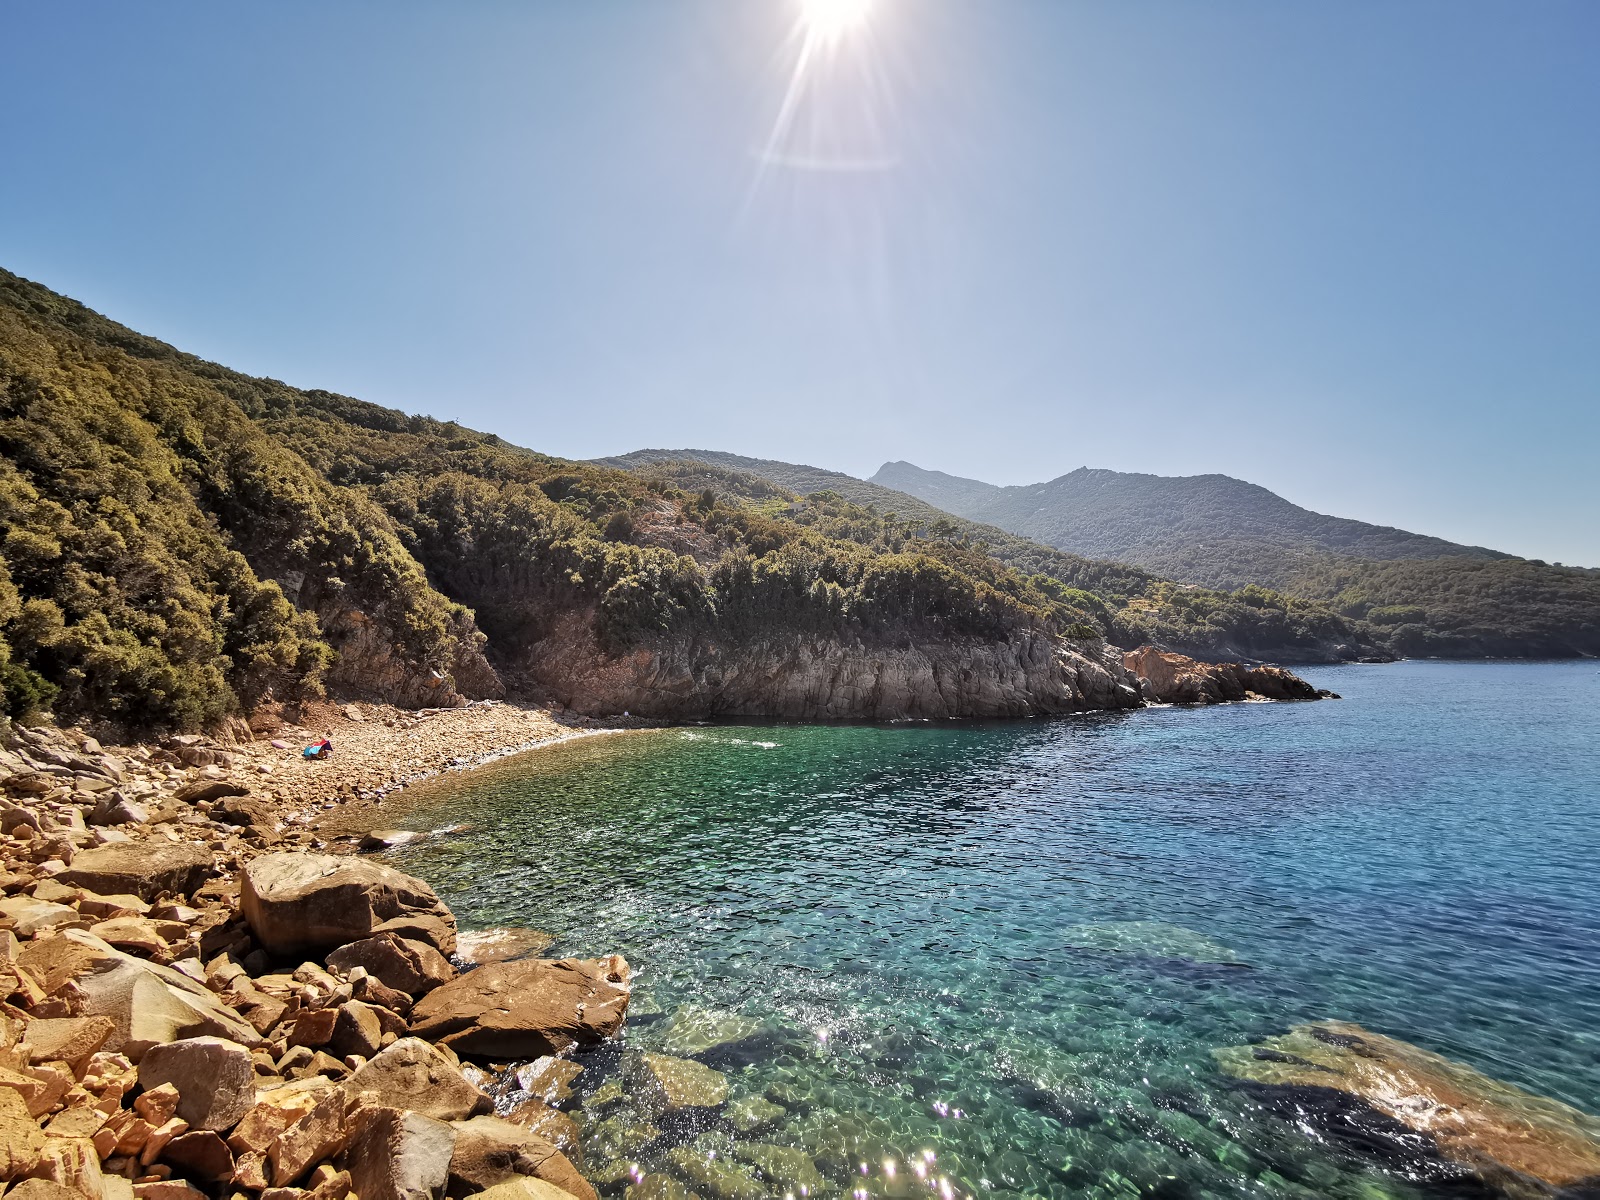 Foto van Spiaggia di Ripa Barata met gemiddeld niveau van netheid